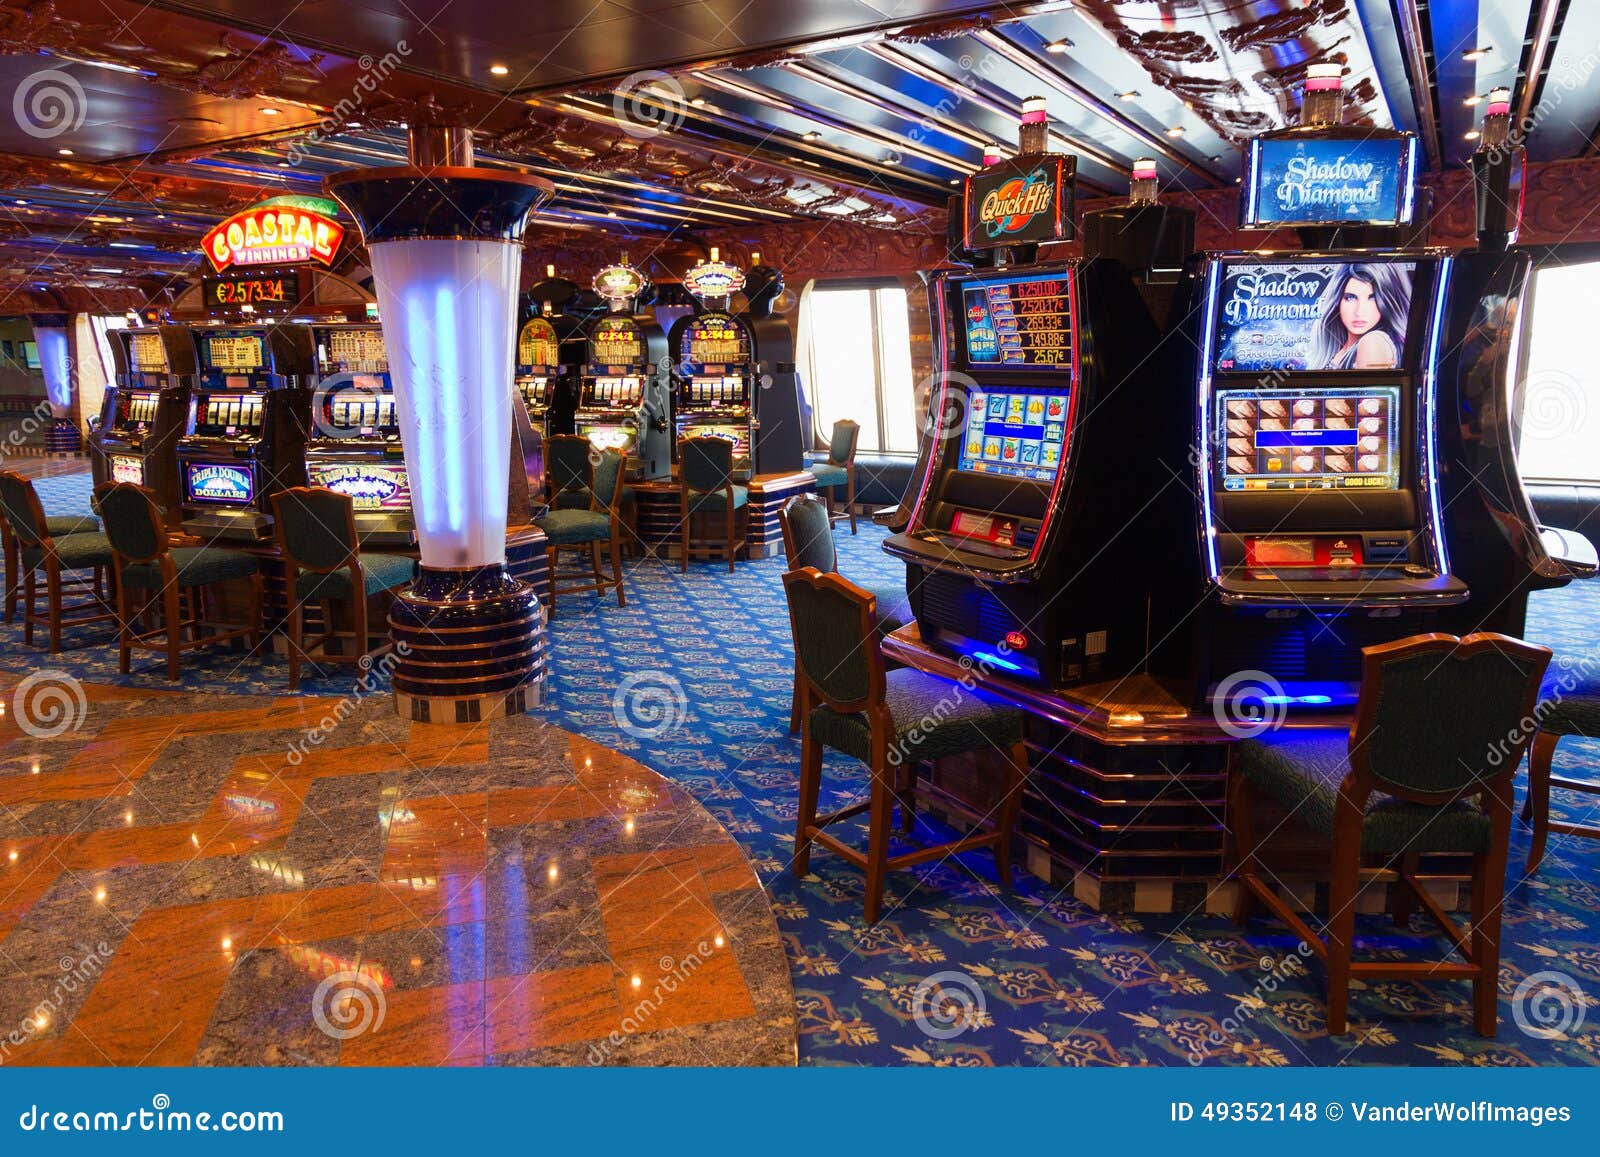 cruise ship casino